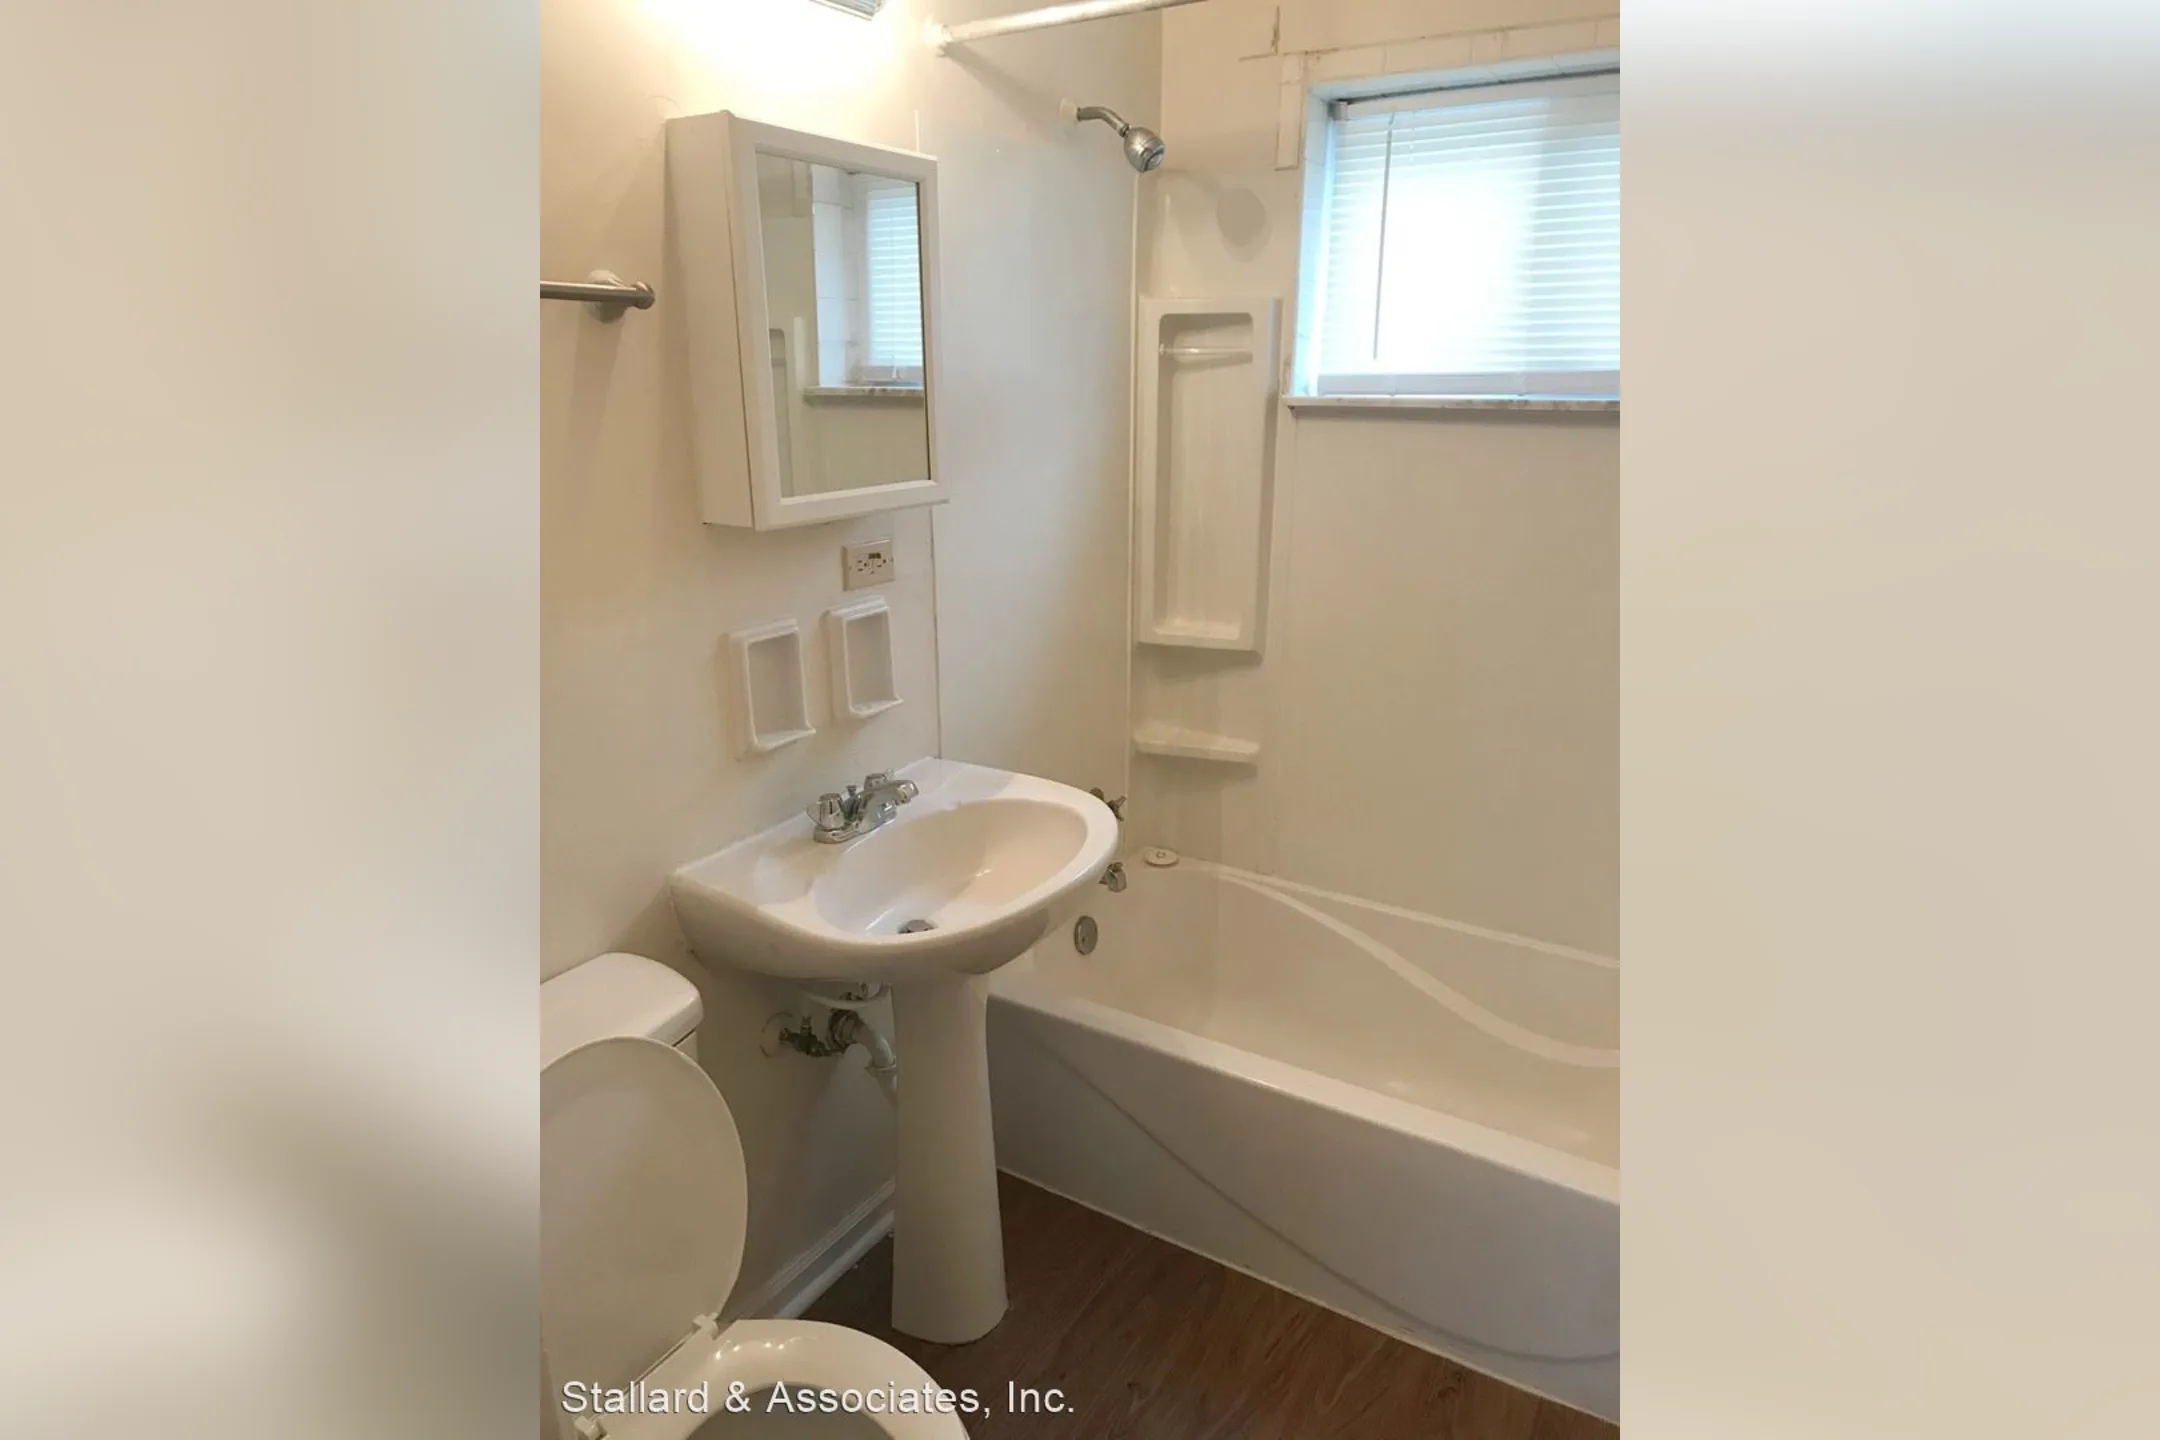 Bathroom - Saxony Court Apartments - Indianapolis, IN